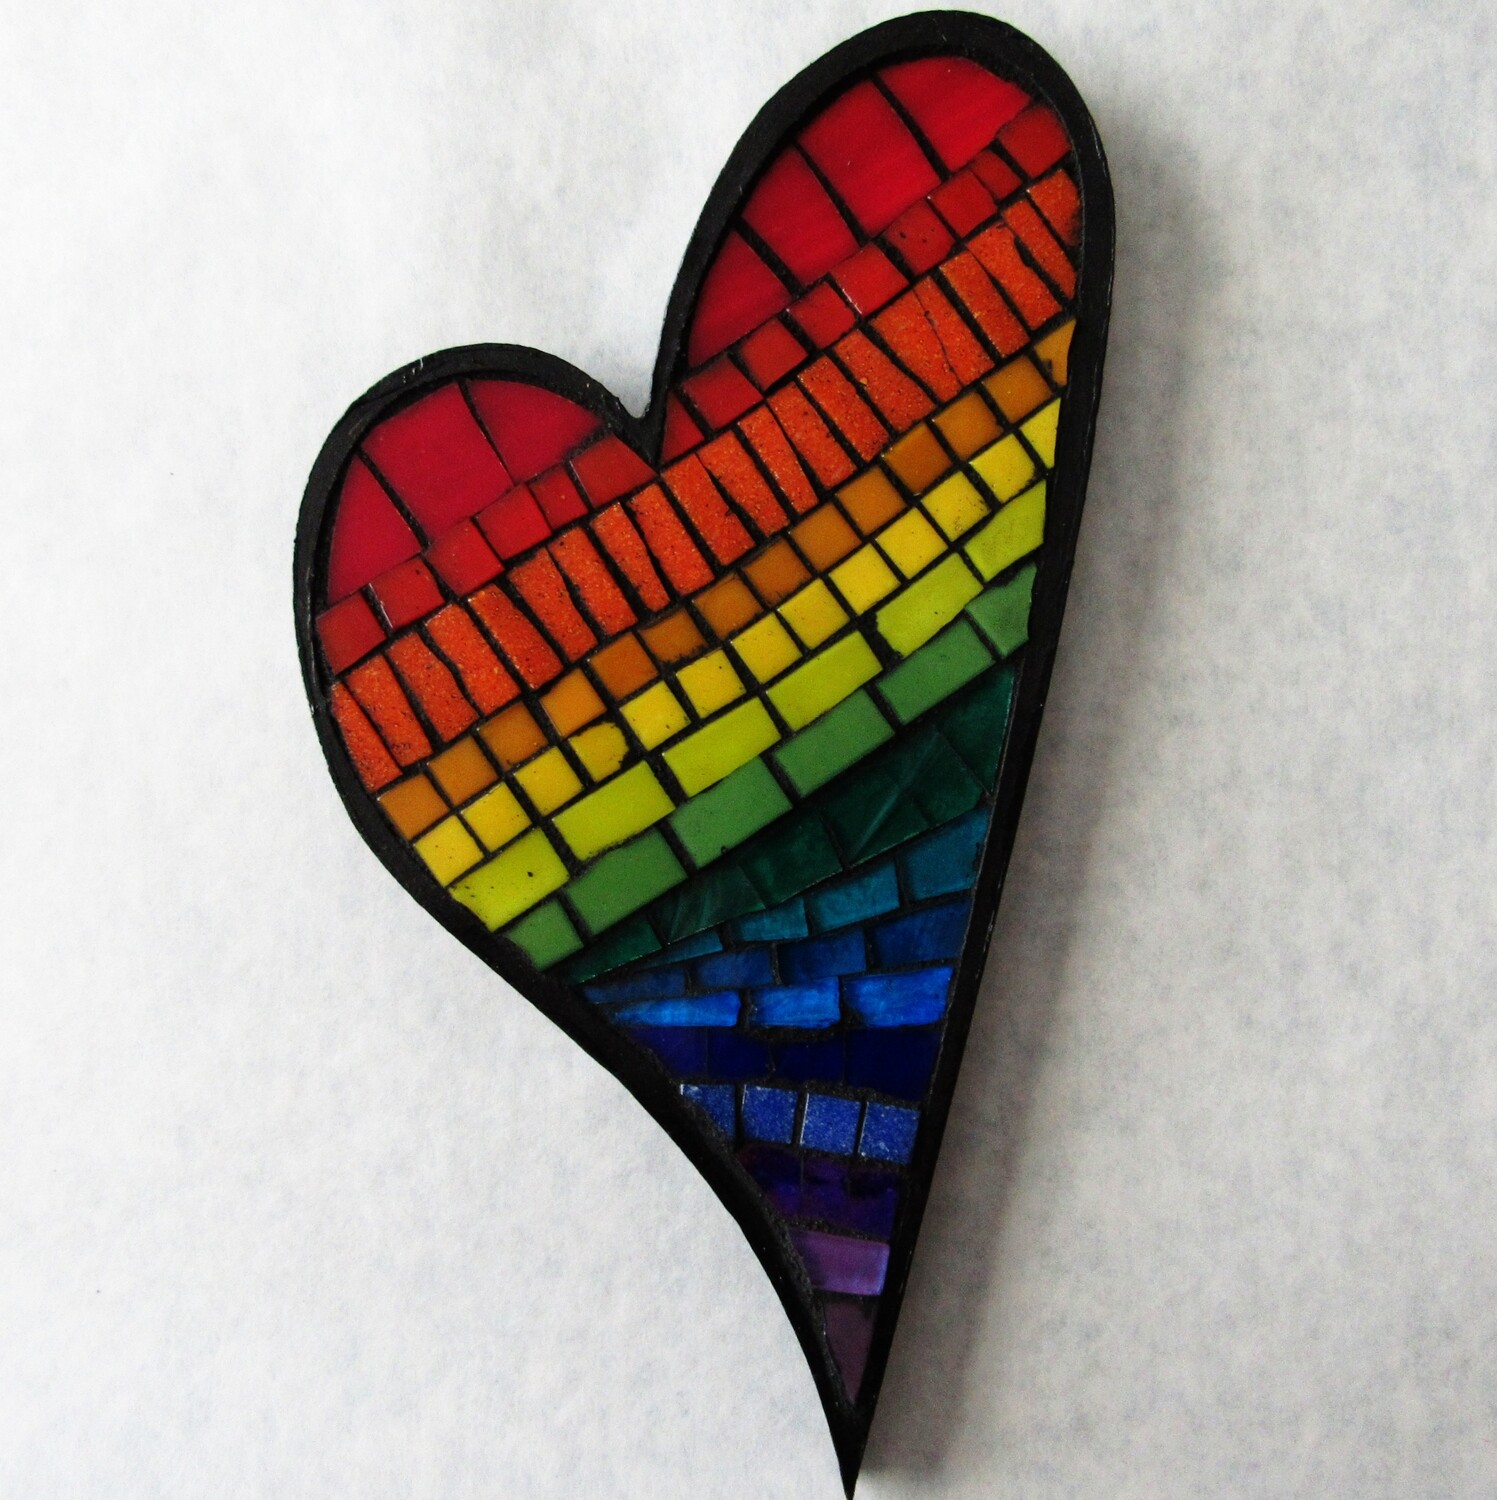 glass mosaic - rainbow heart